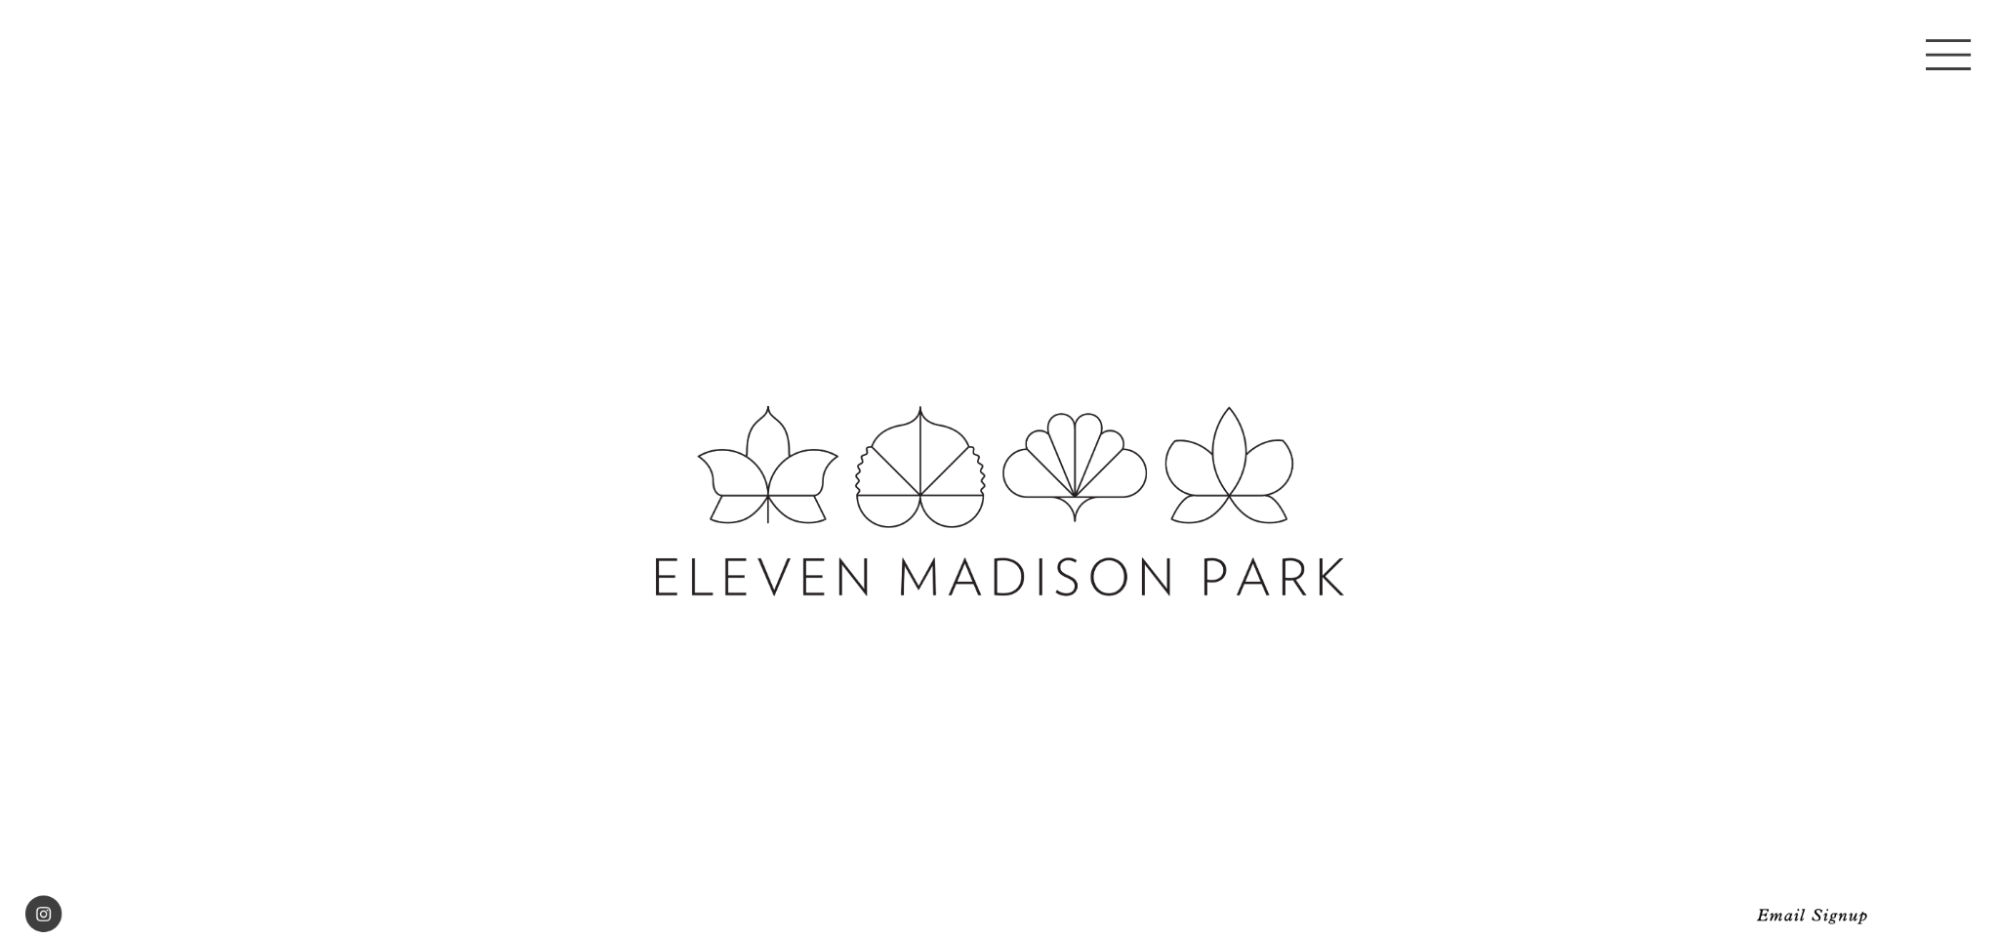 Eleven Madison Park main page image